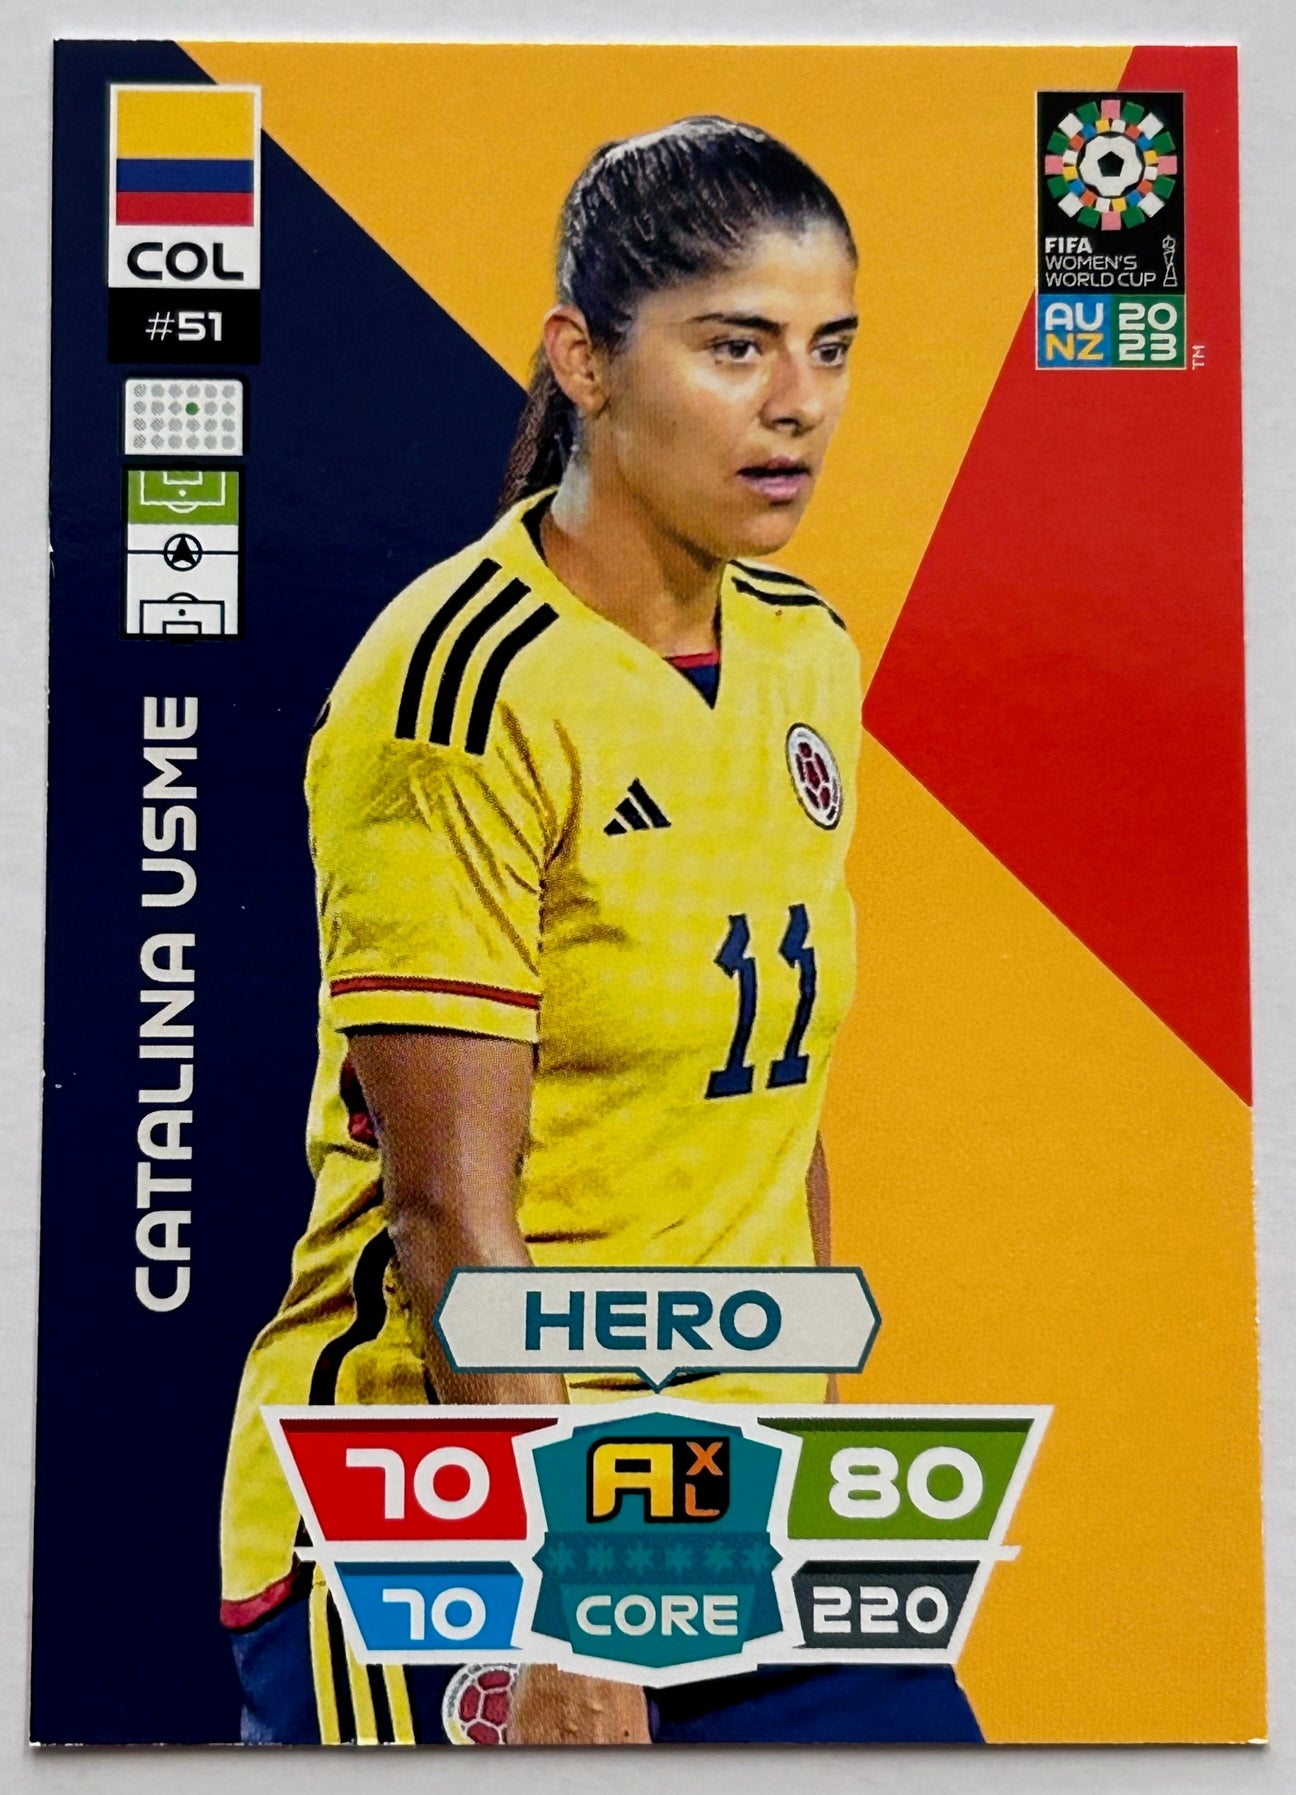 Panini Adrenalyn XL FIFA Women's World Cup 2023 - Single Trading Cards (#1 - #3)